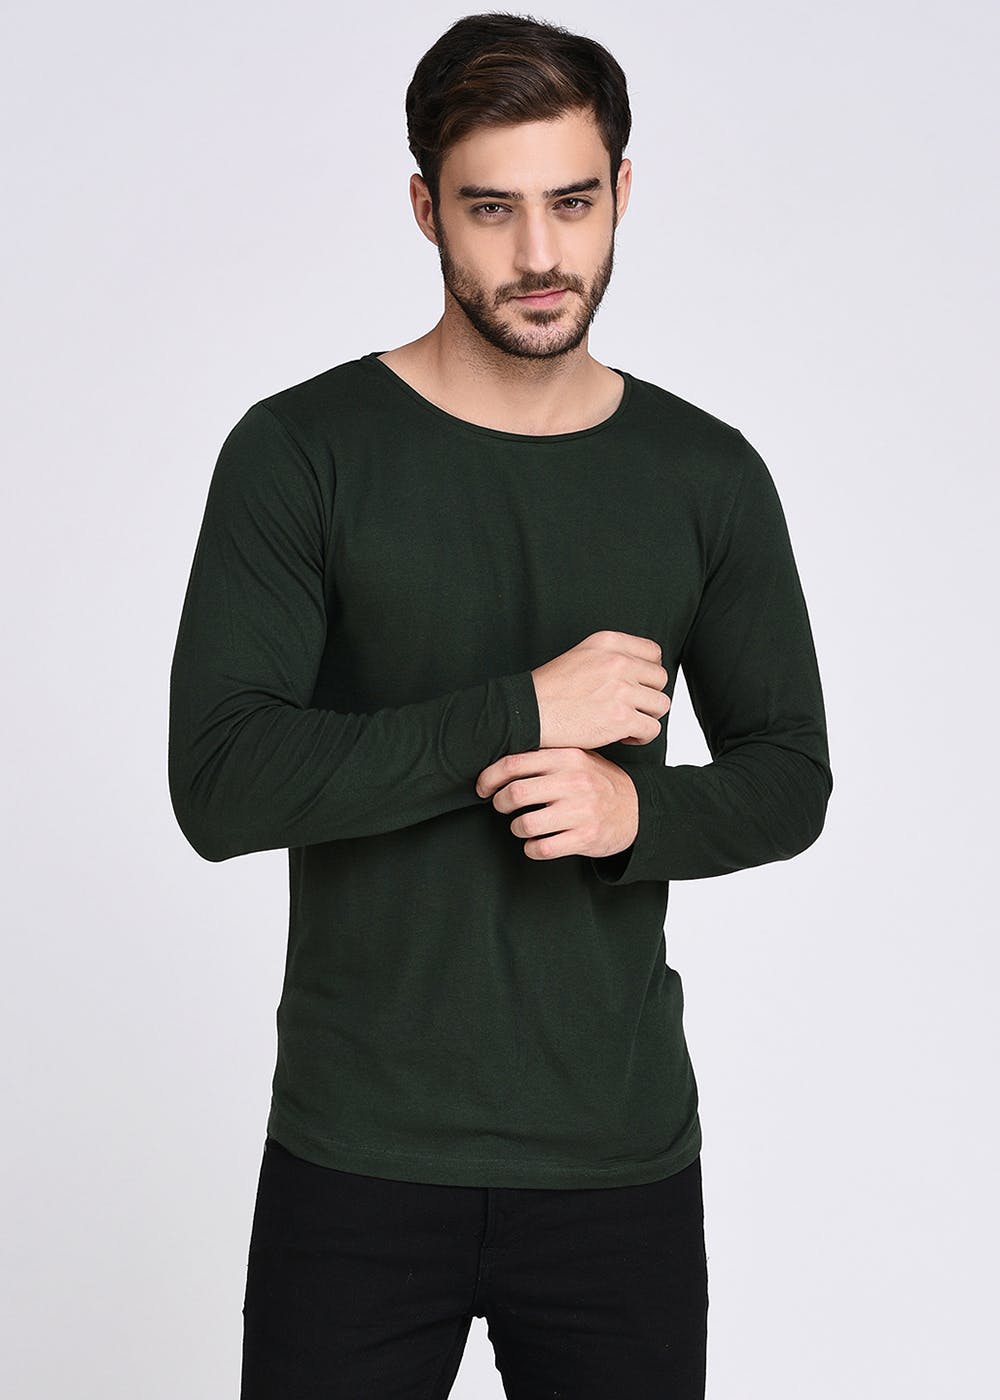 Get Solid Raglan Sleeved Slim Fit T-Shirt at ₹ 395 | LBB Shop